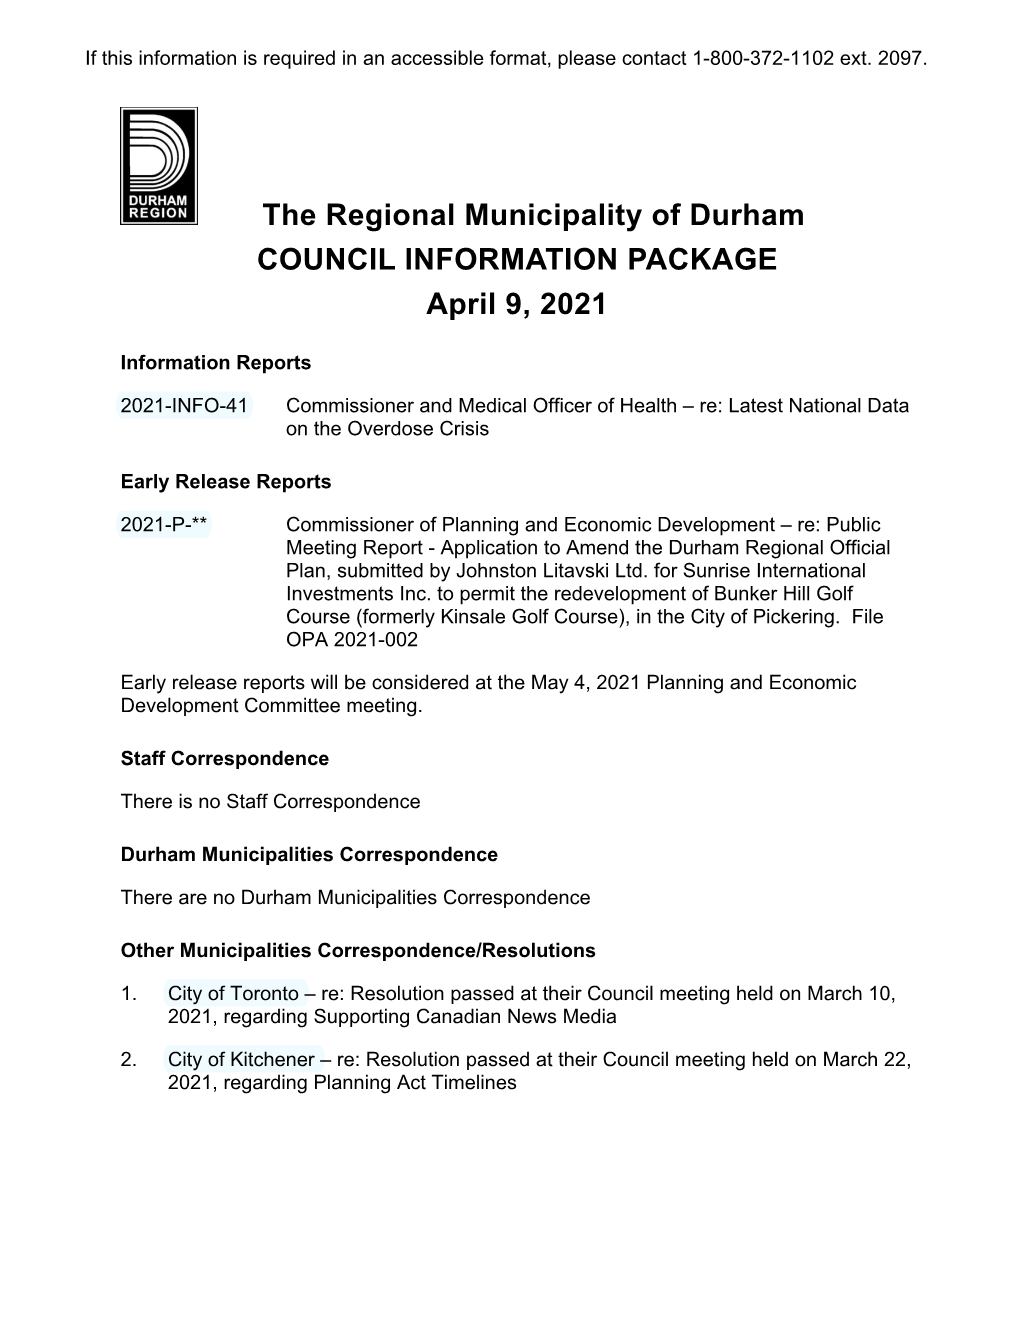 Council Information Package, April 9, 2021